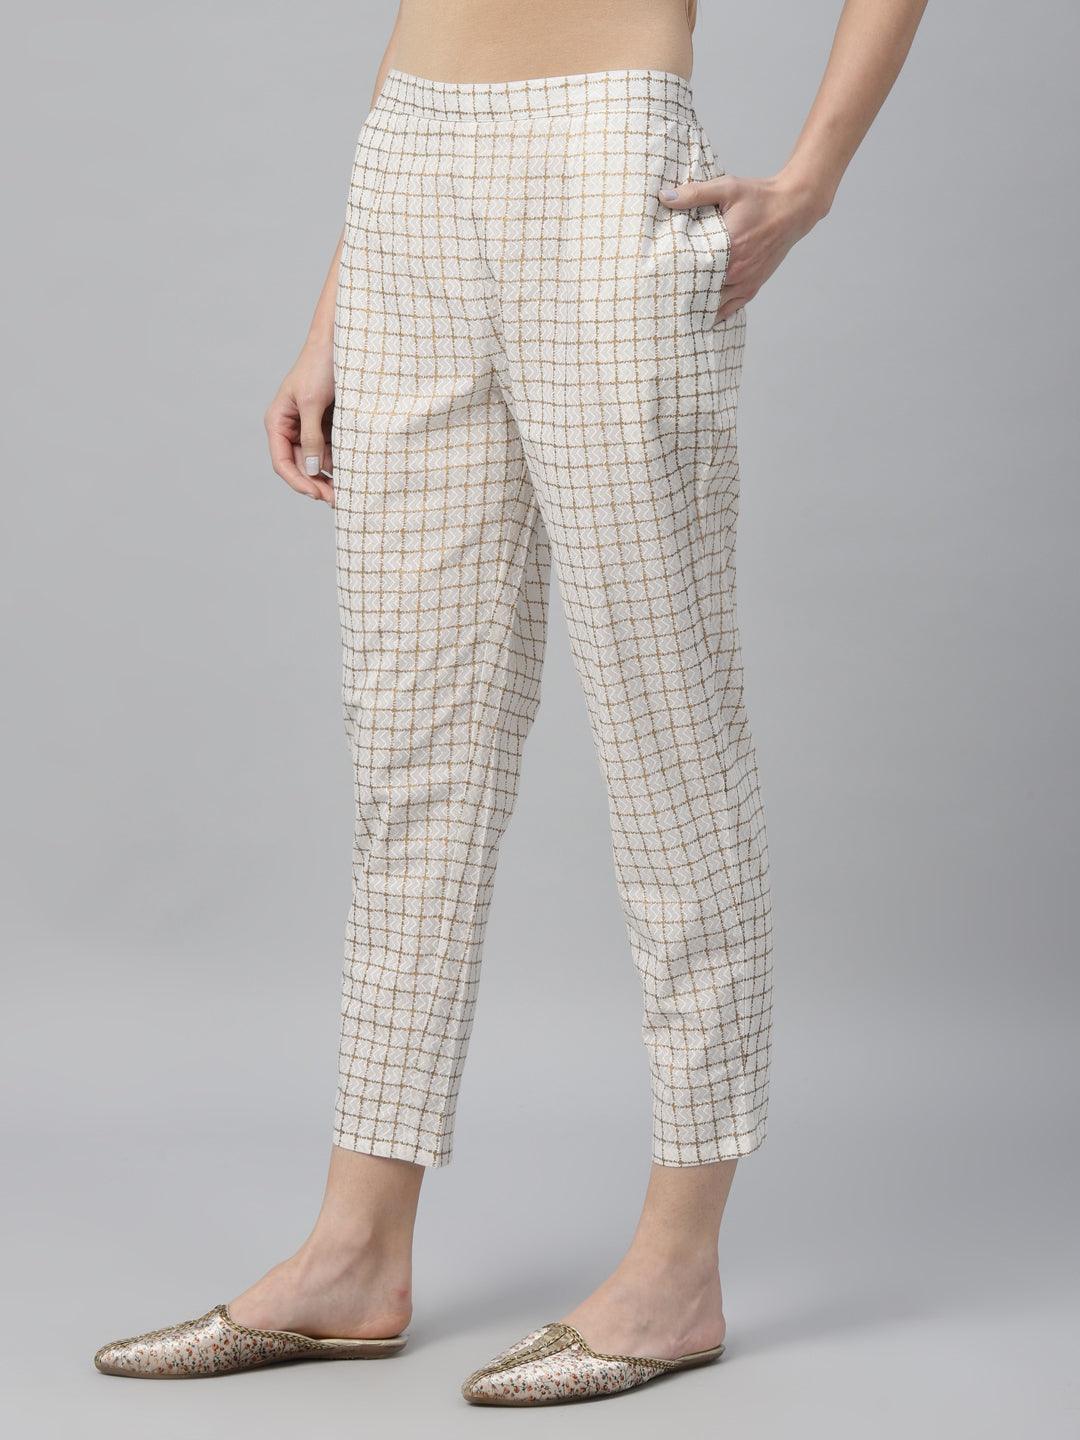 White Checkered Cotton Trousers - Libas